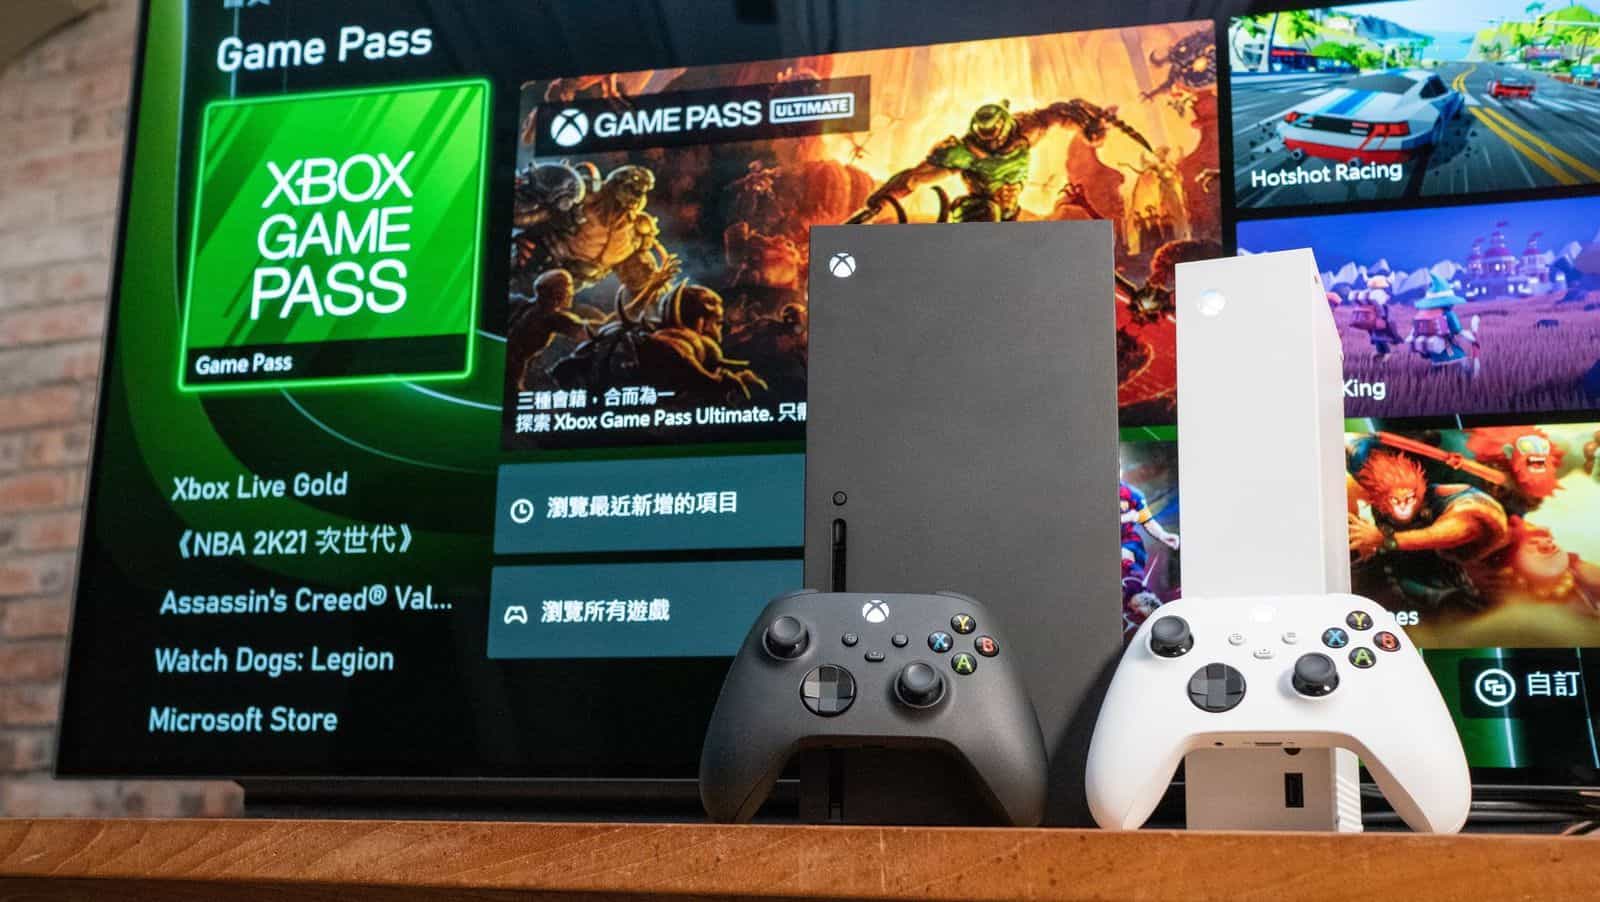 Икс бокс. Xbox game Pass Ultimate. ГЕЙМПАСС ультимейт Голд. Игры на Xbox по созданию игр. Игра на икс бокс пасс